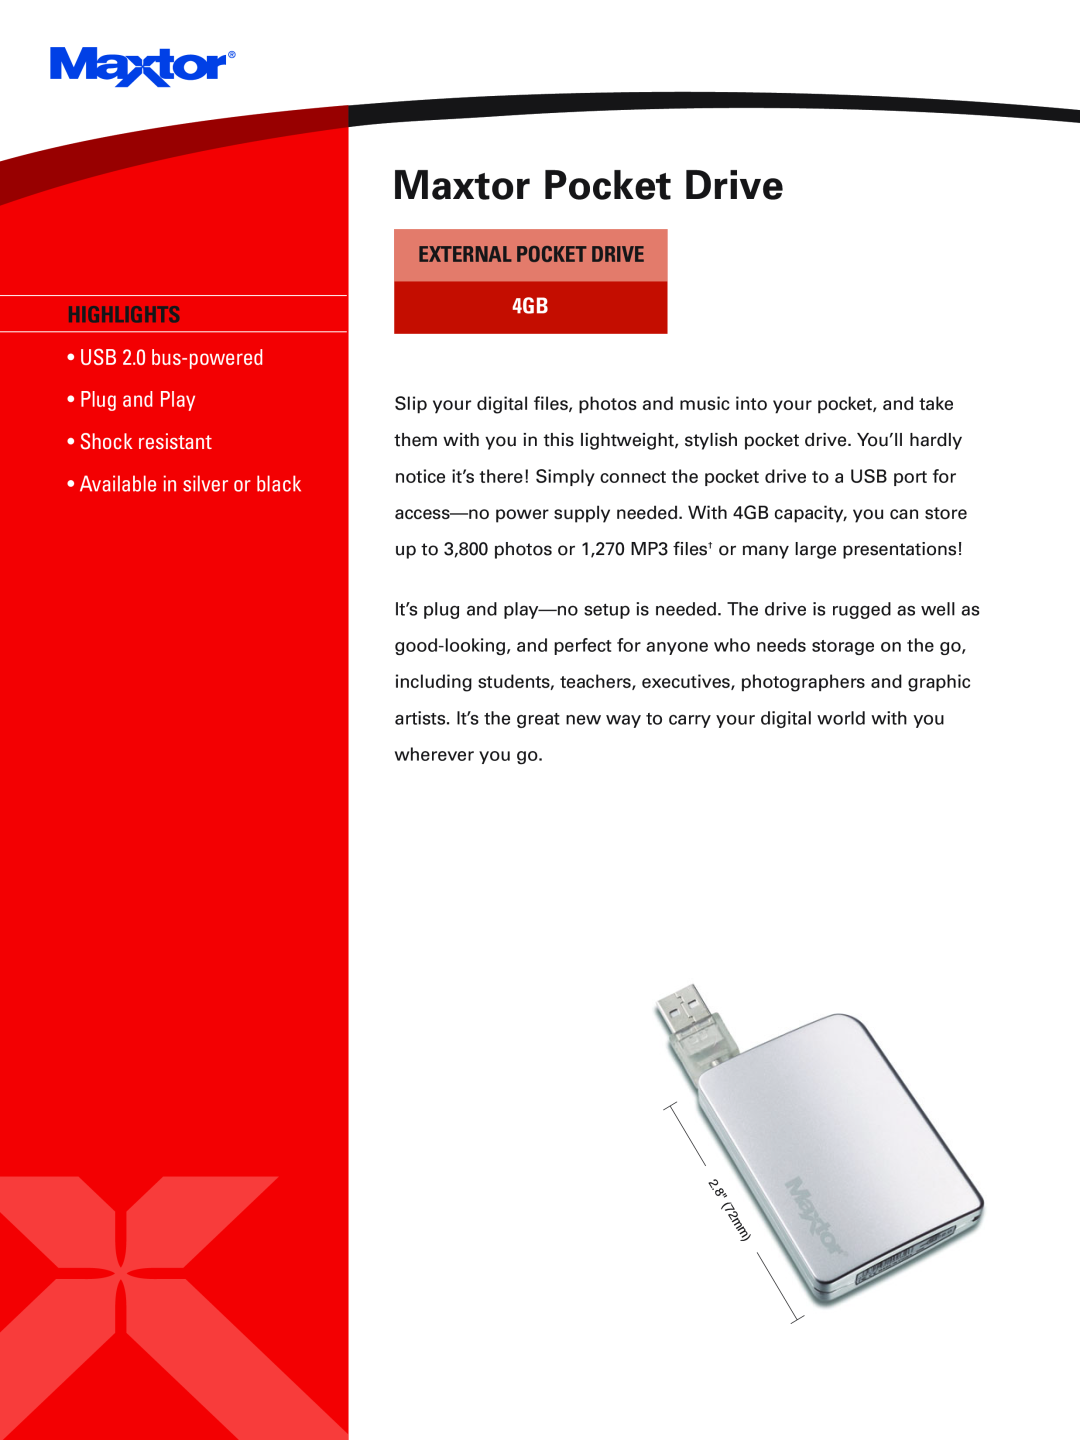 Maxtor manual External Pocket Drive, Maxtor Pocket Drive, Highlights, USB 2.0 bus-powered Plug and Play Shock resistant 